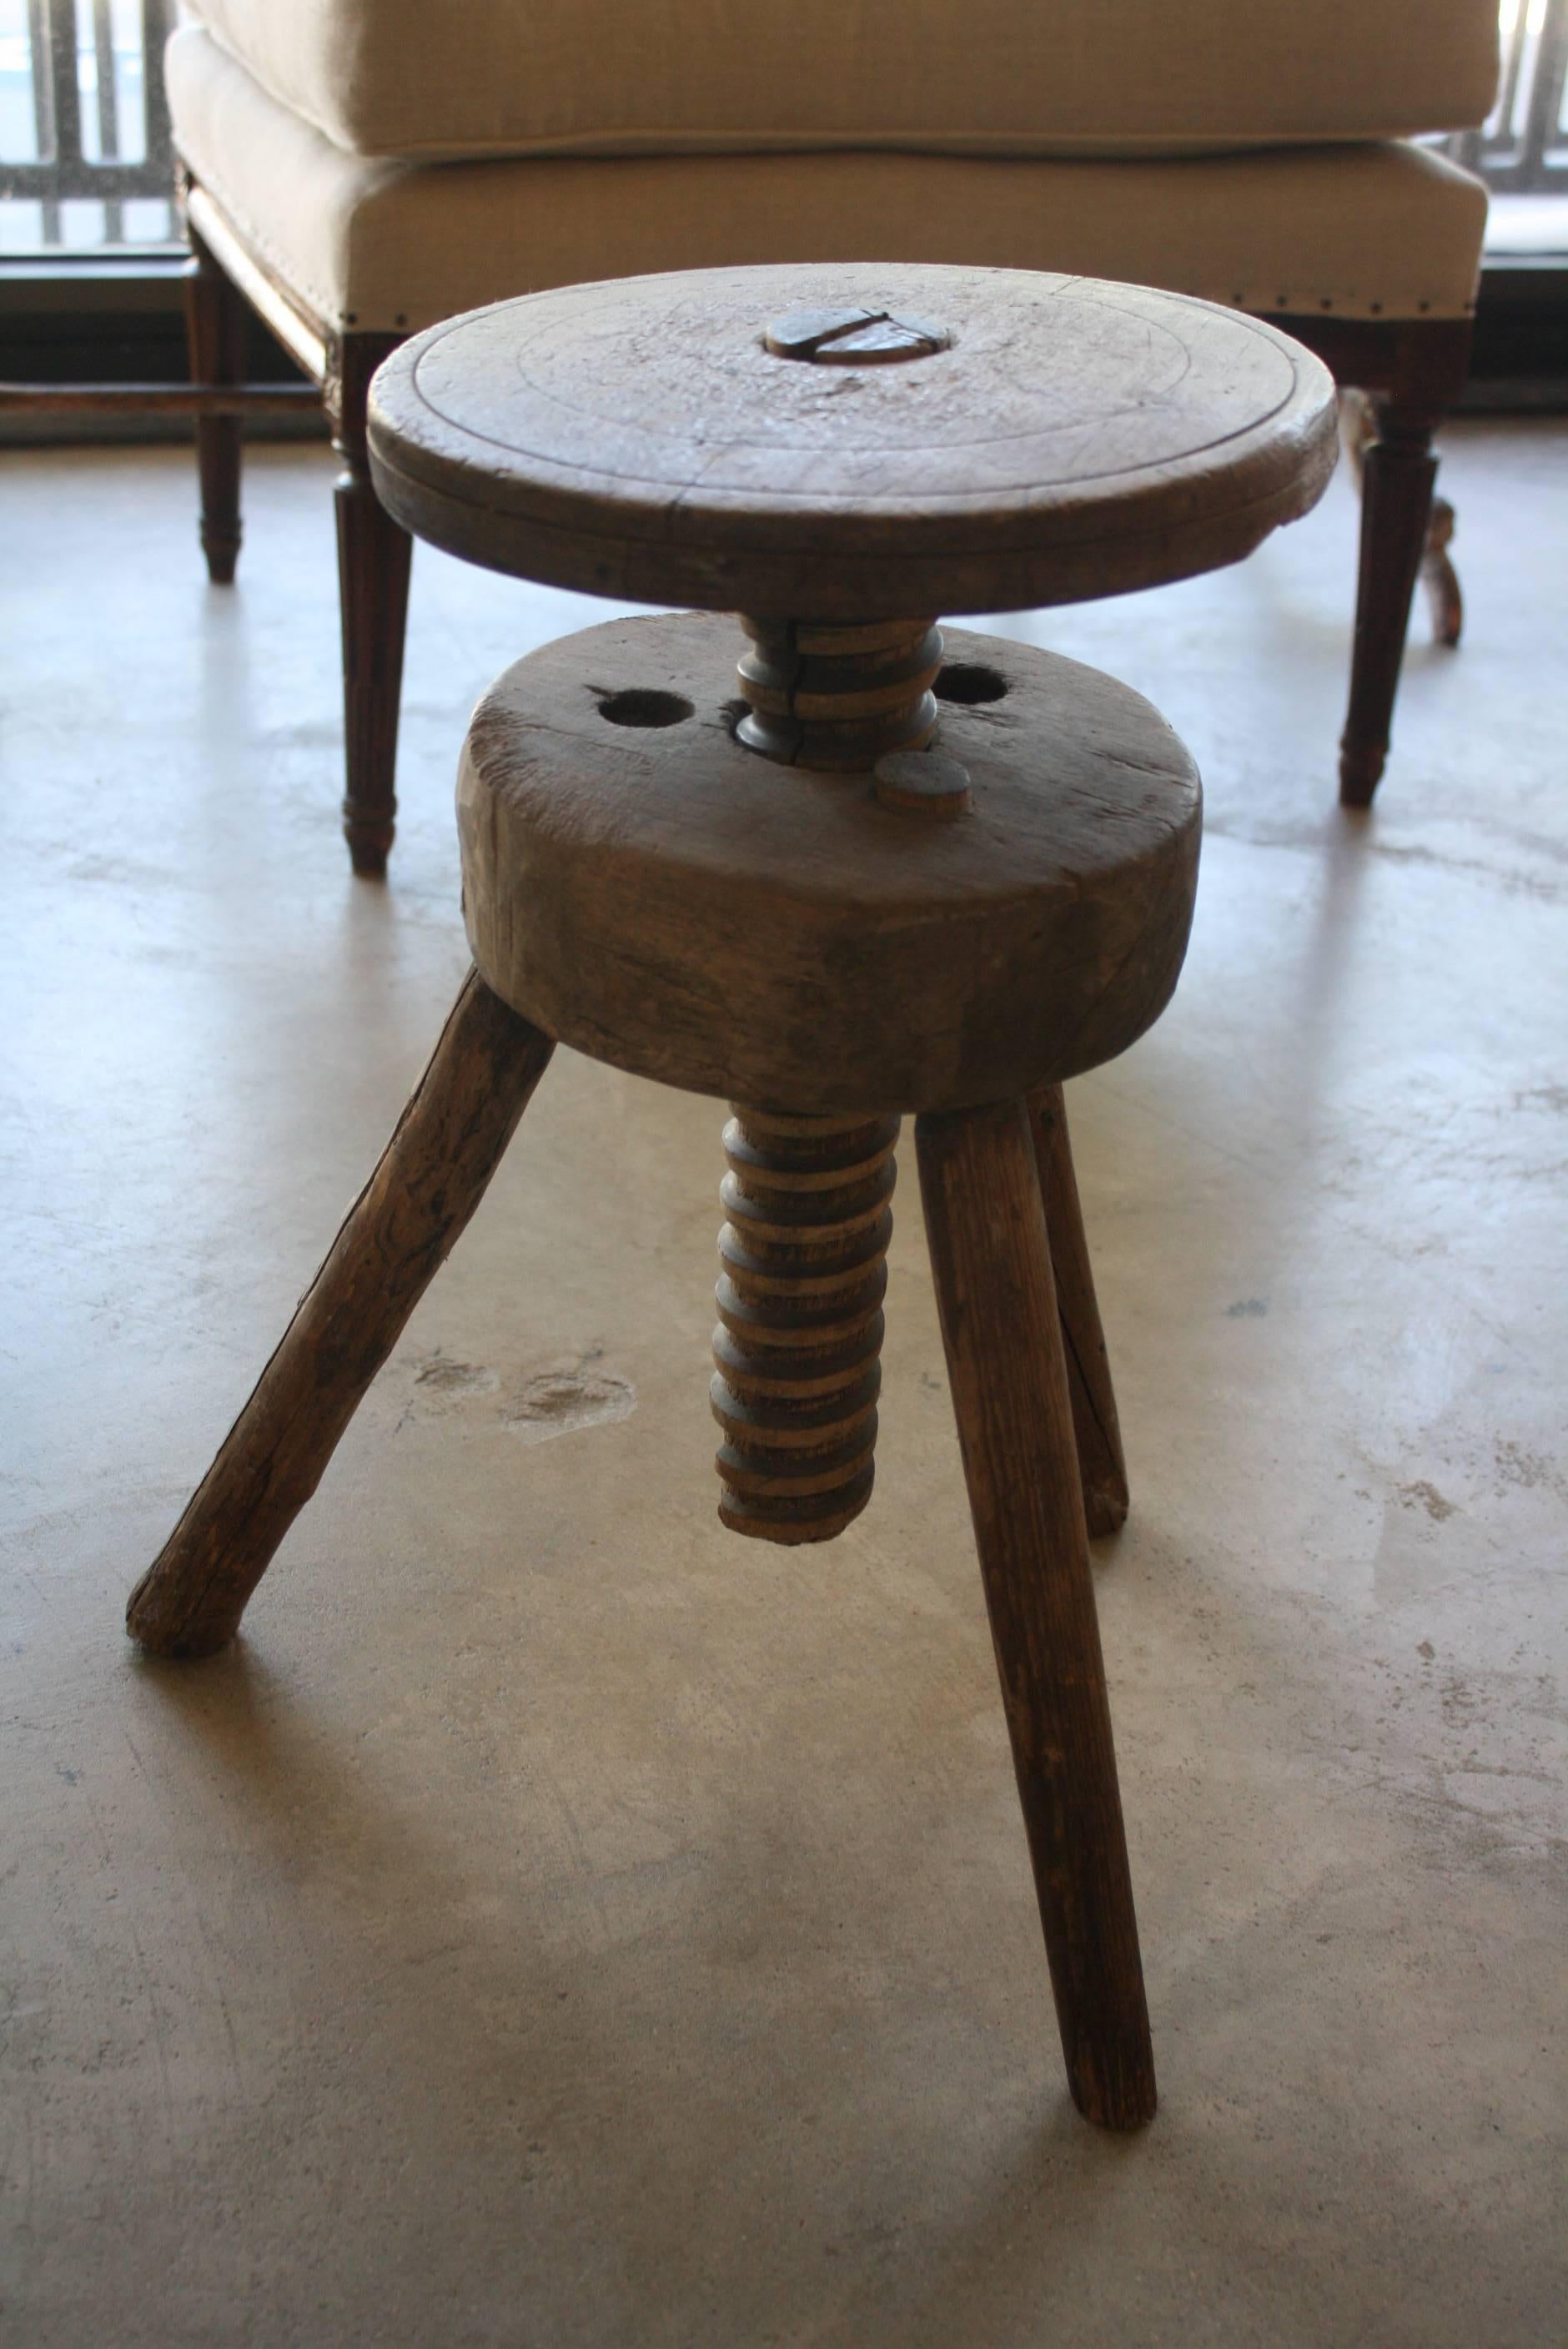 Vintage adjustable artist's stool with carved wood screw post.